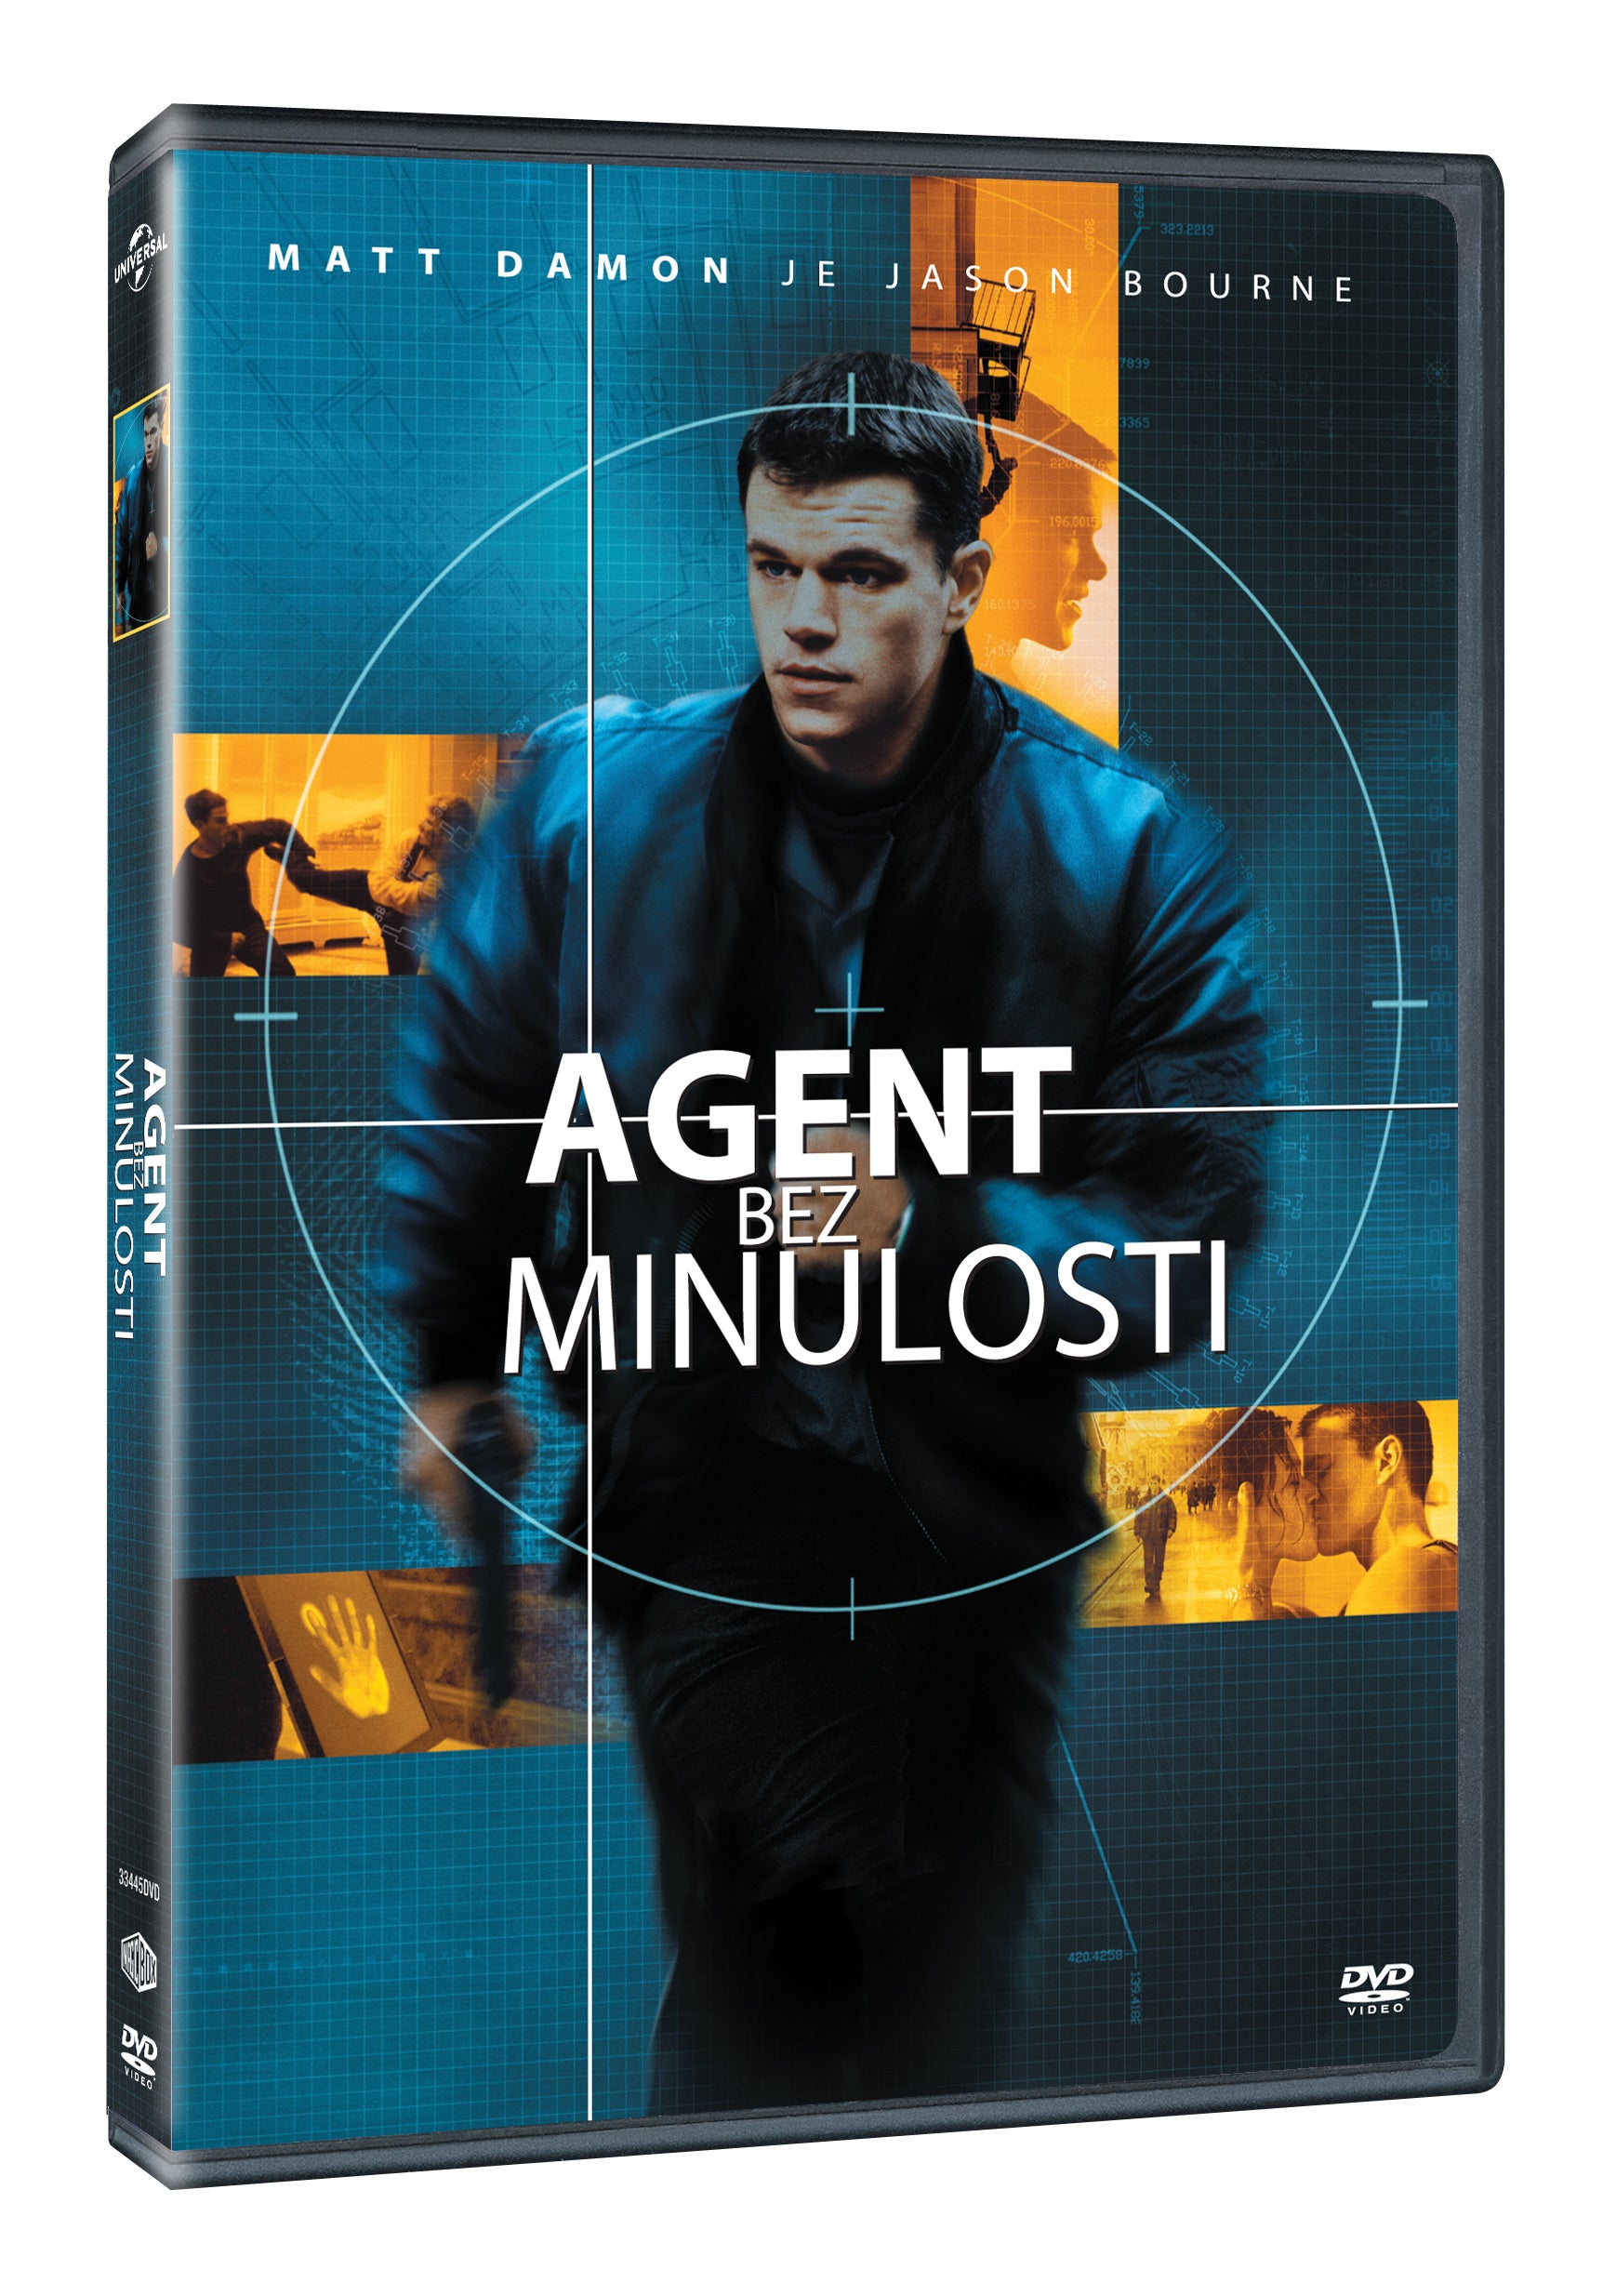 Agent mit minimaler DVD / The Bourne Identity